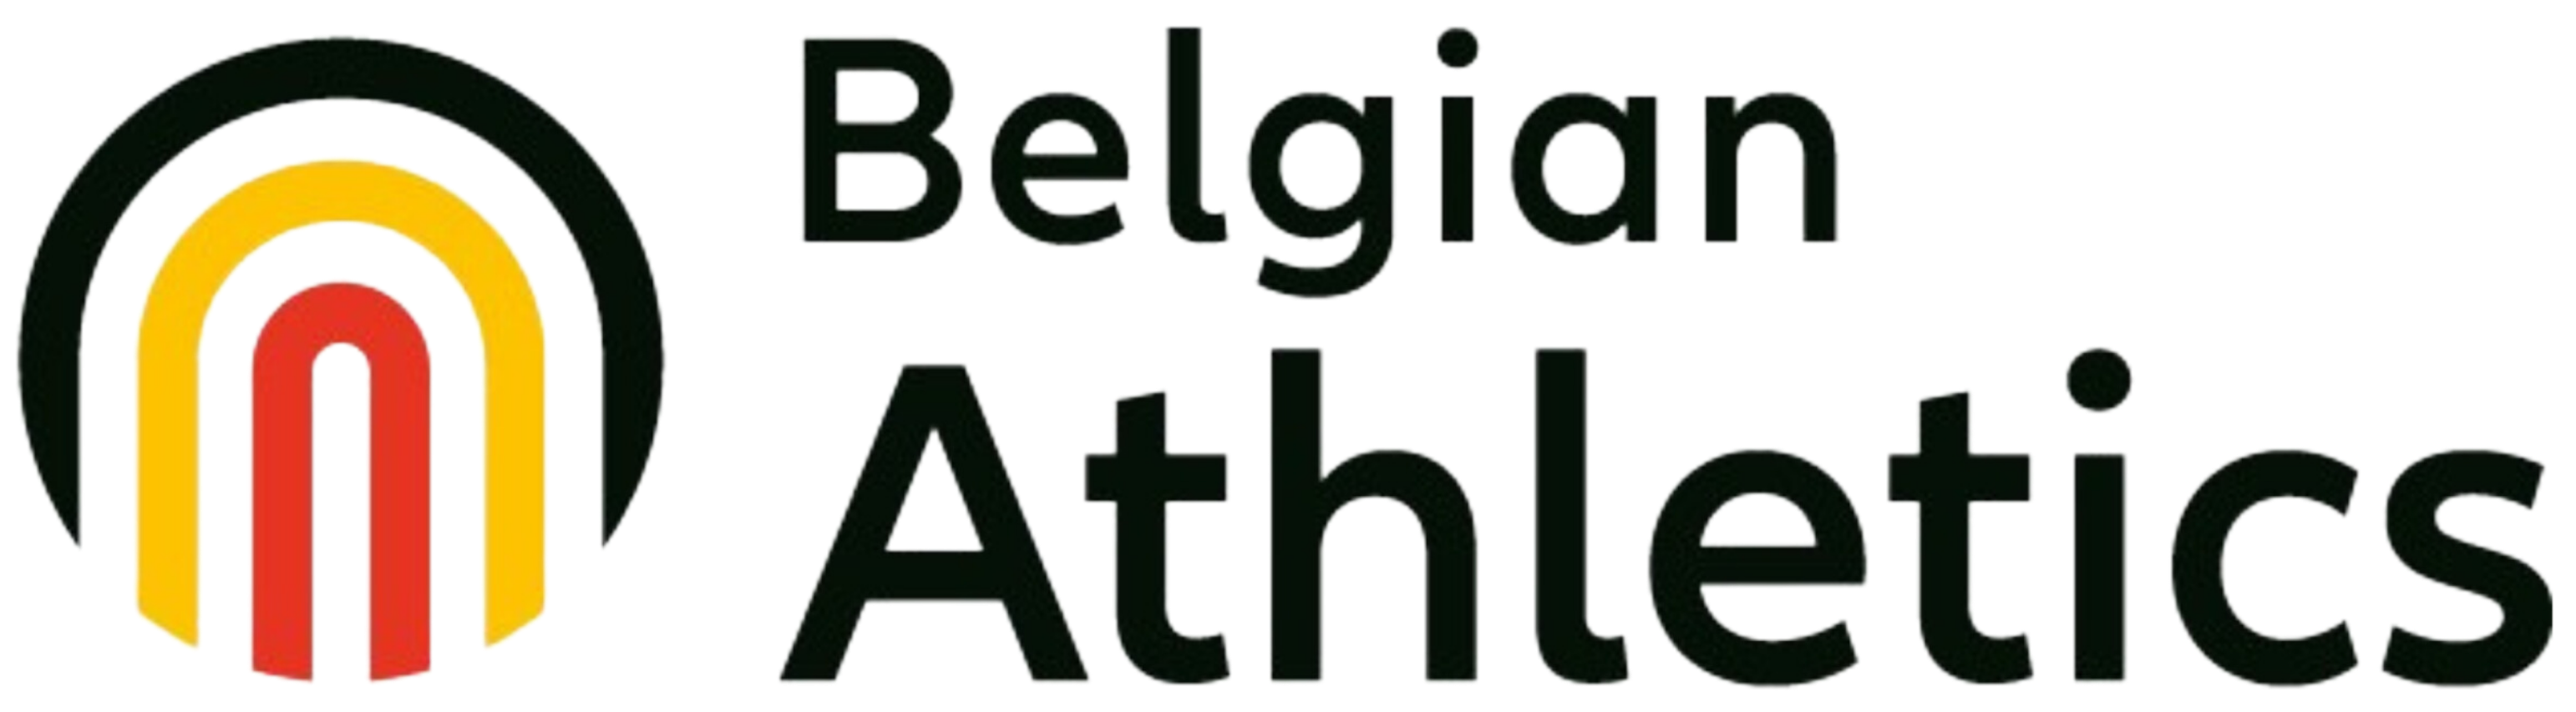 belgainathletics-logo